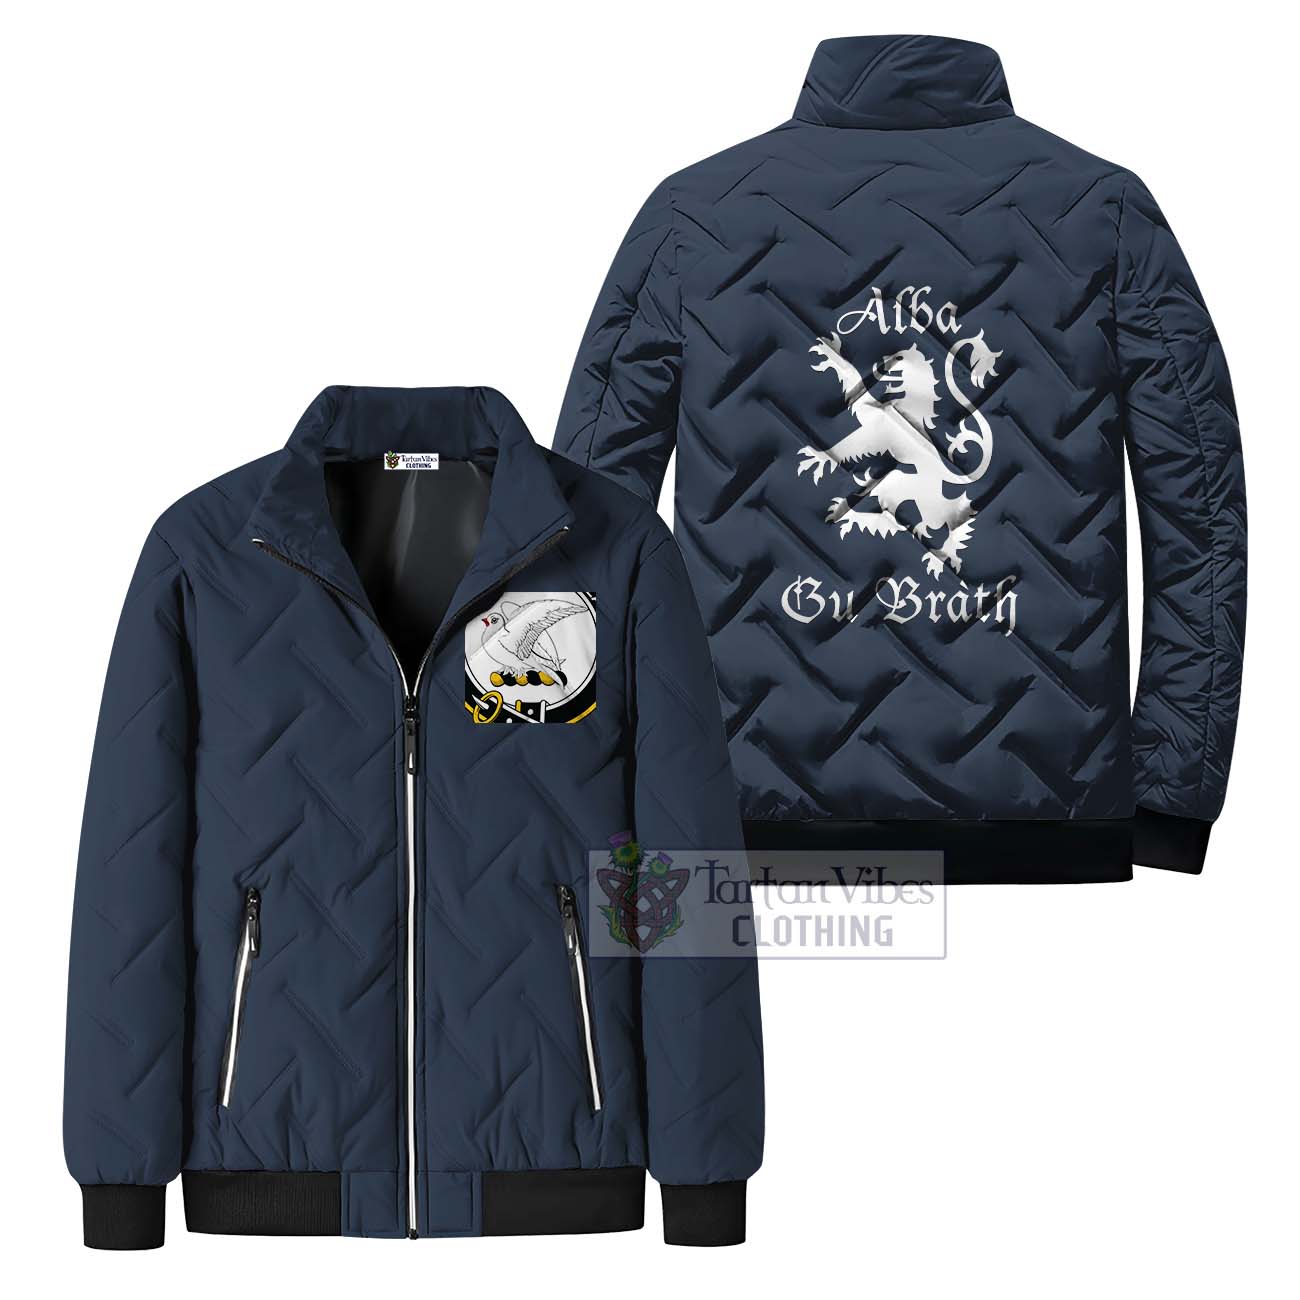 Tartan Vibes Clothing Norvel Family Crest Padded Cotton Jacket Lion Rampant Alba Gu Brath Style